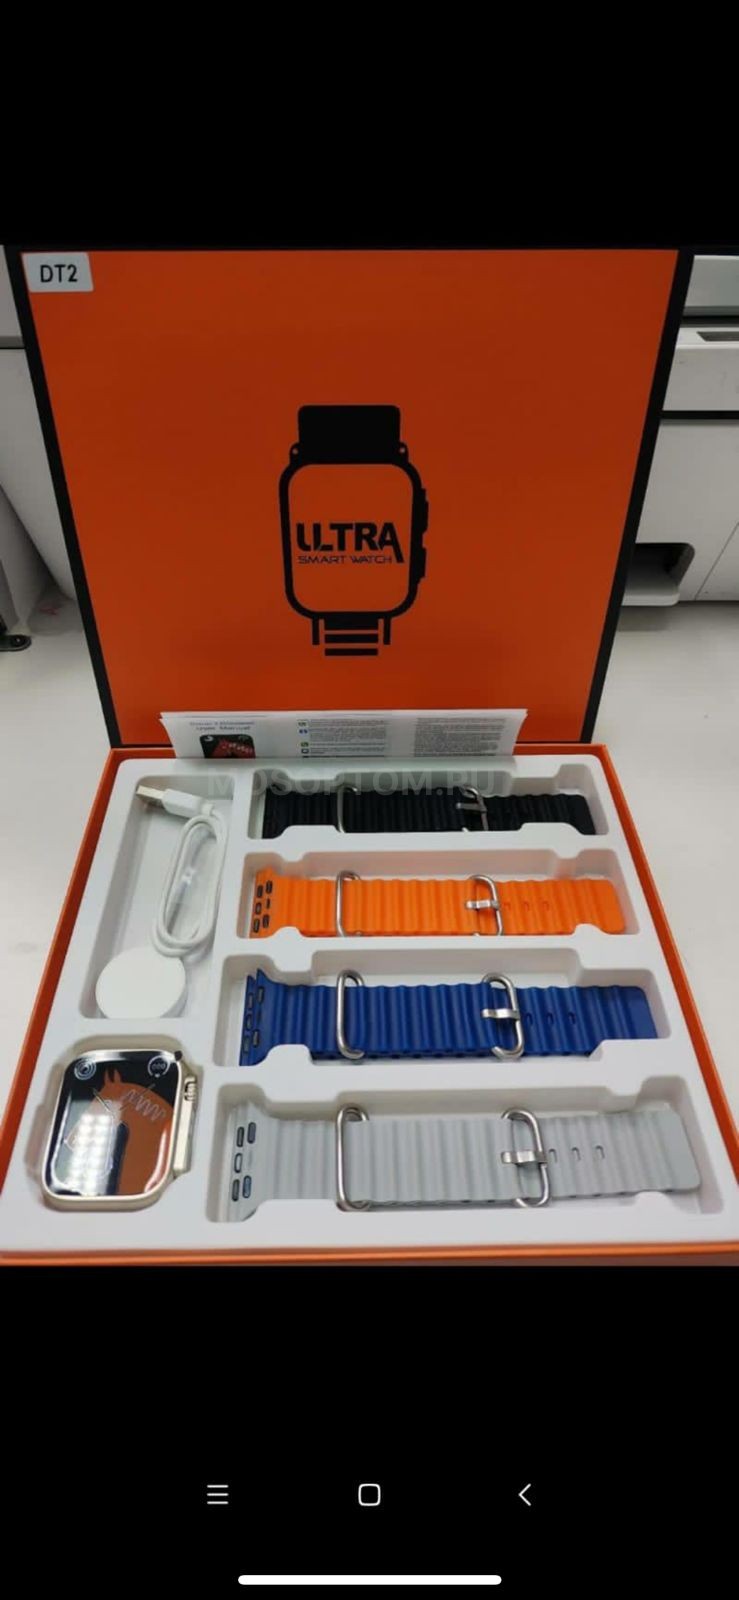 Умные часы Ultra Smart Watch DT2 оптом